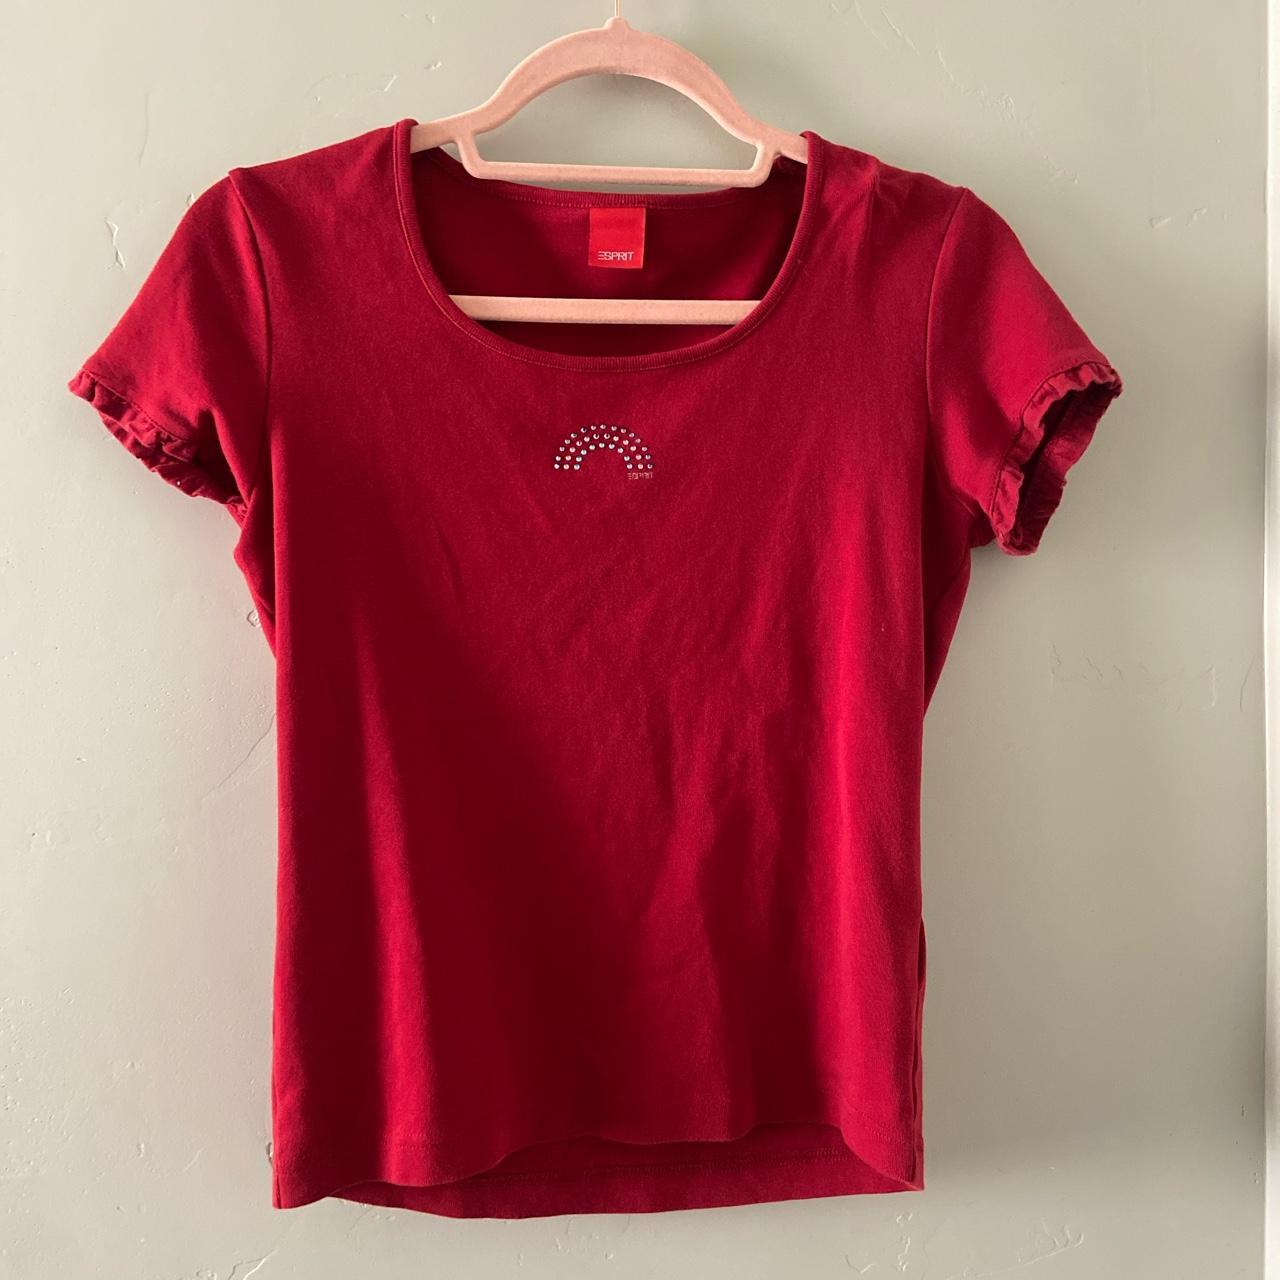 Espirit Women's Red Shirt